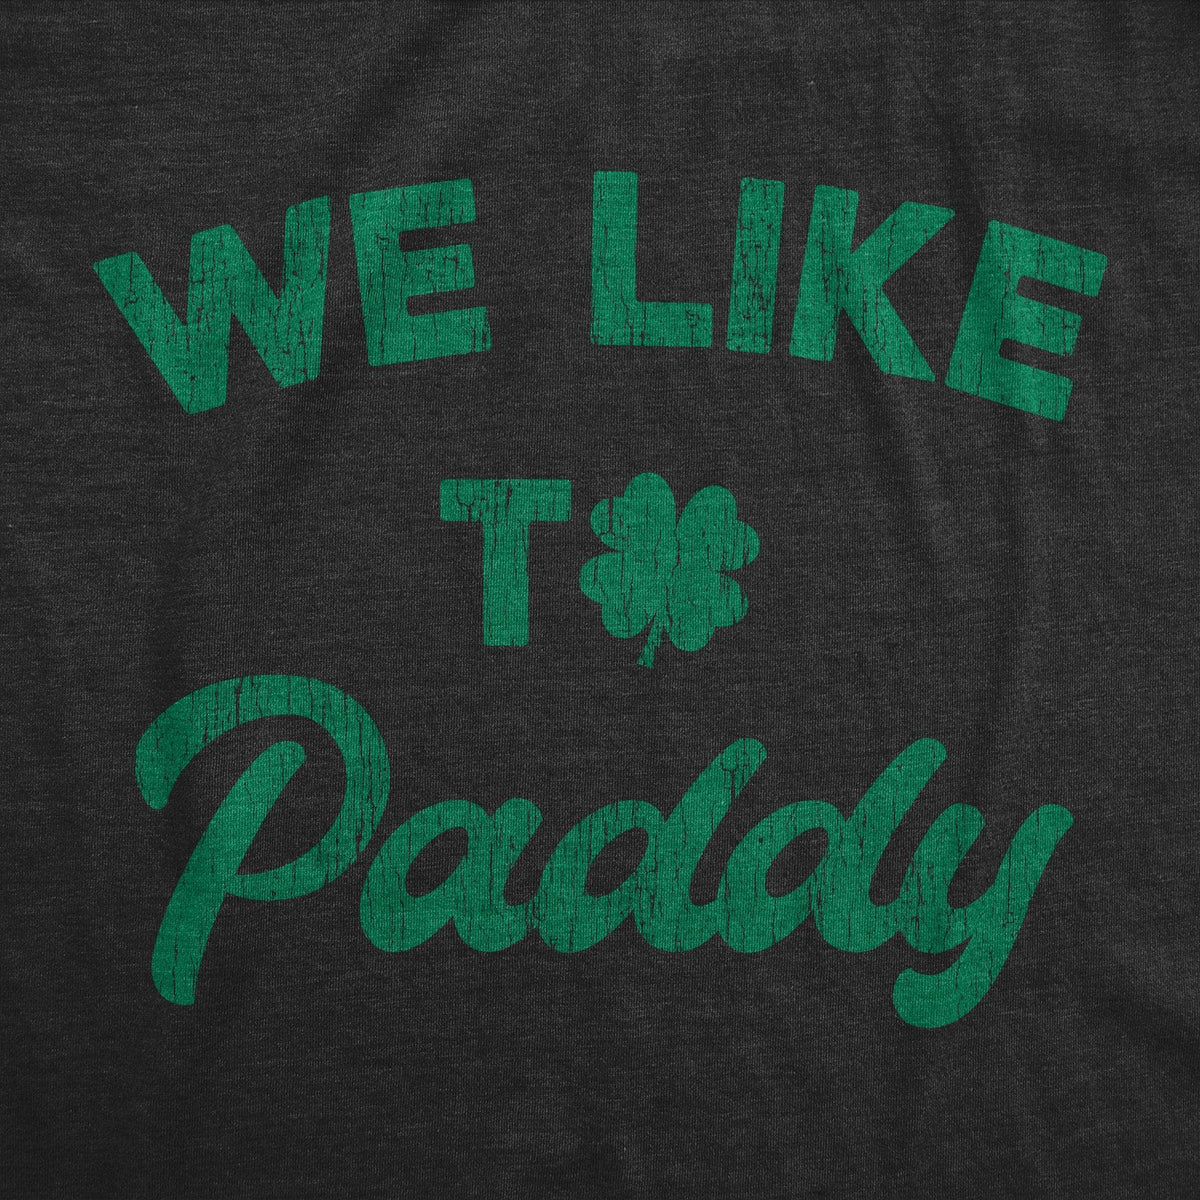 We Like To Paddy Men&#39;s Tshirt  -  Crazy Dog T-Shirts